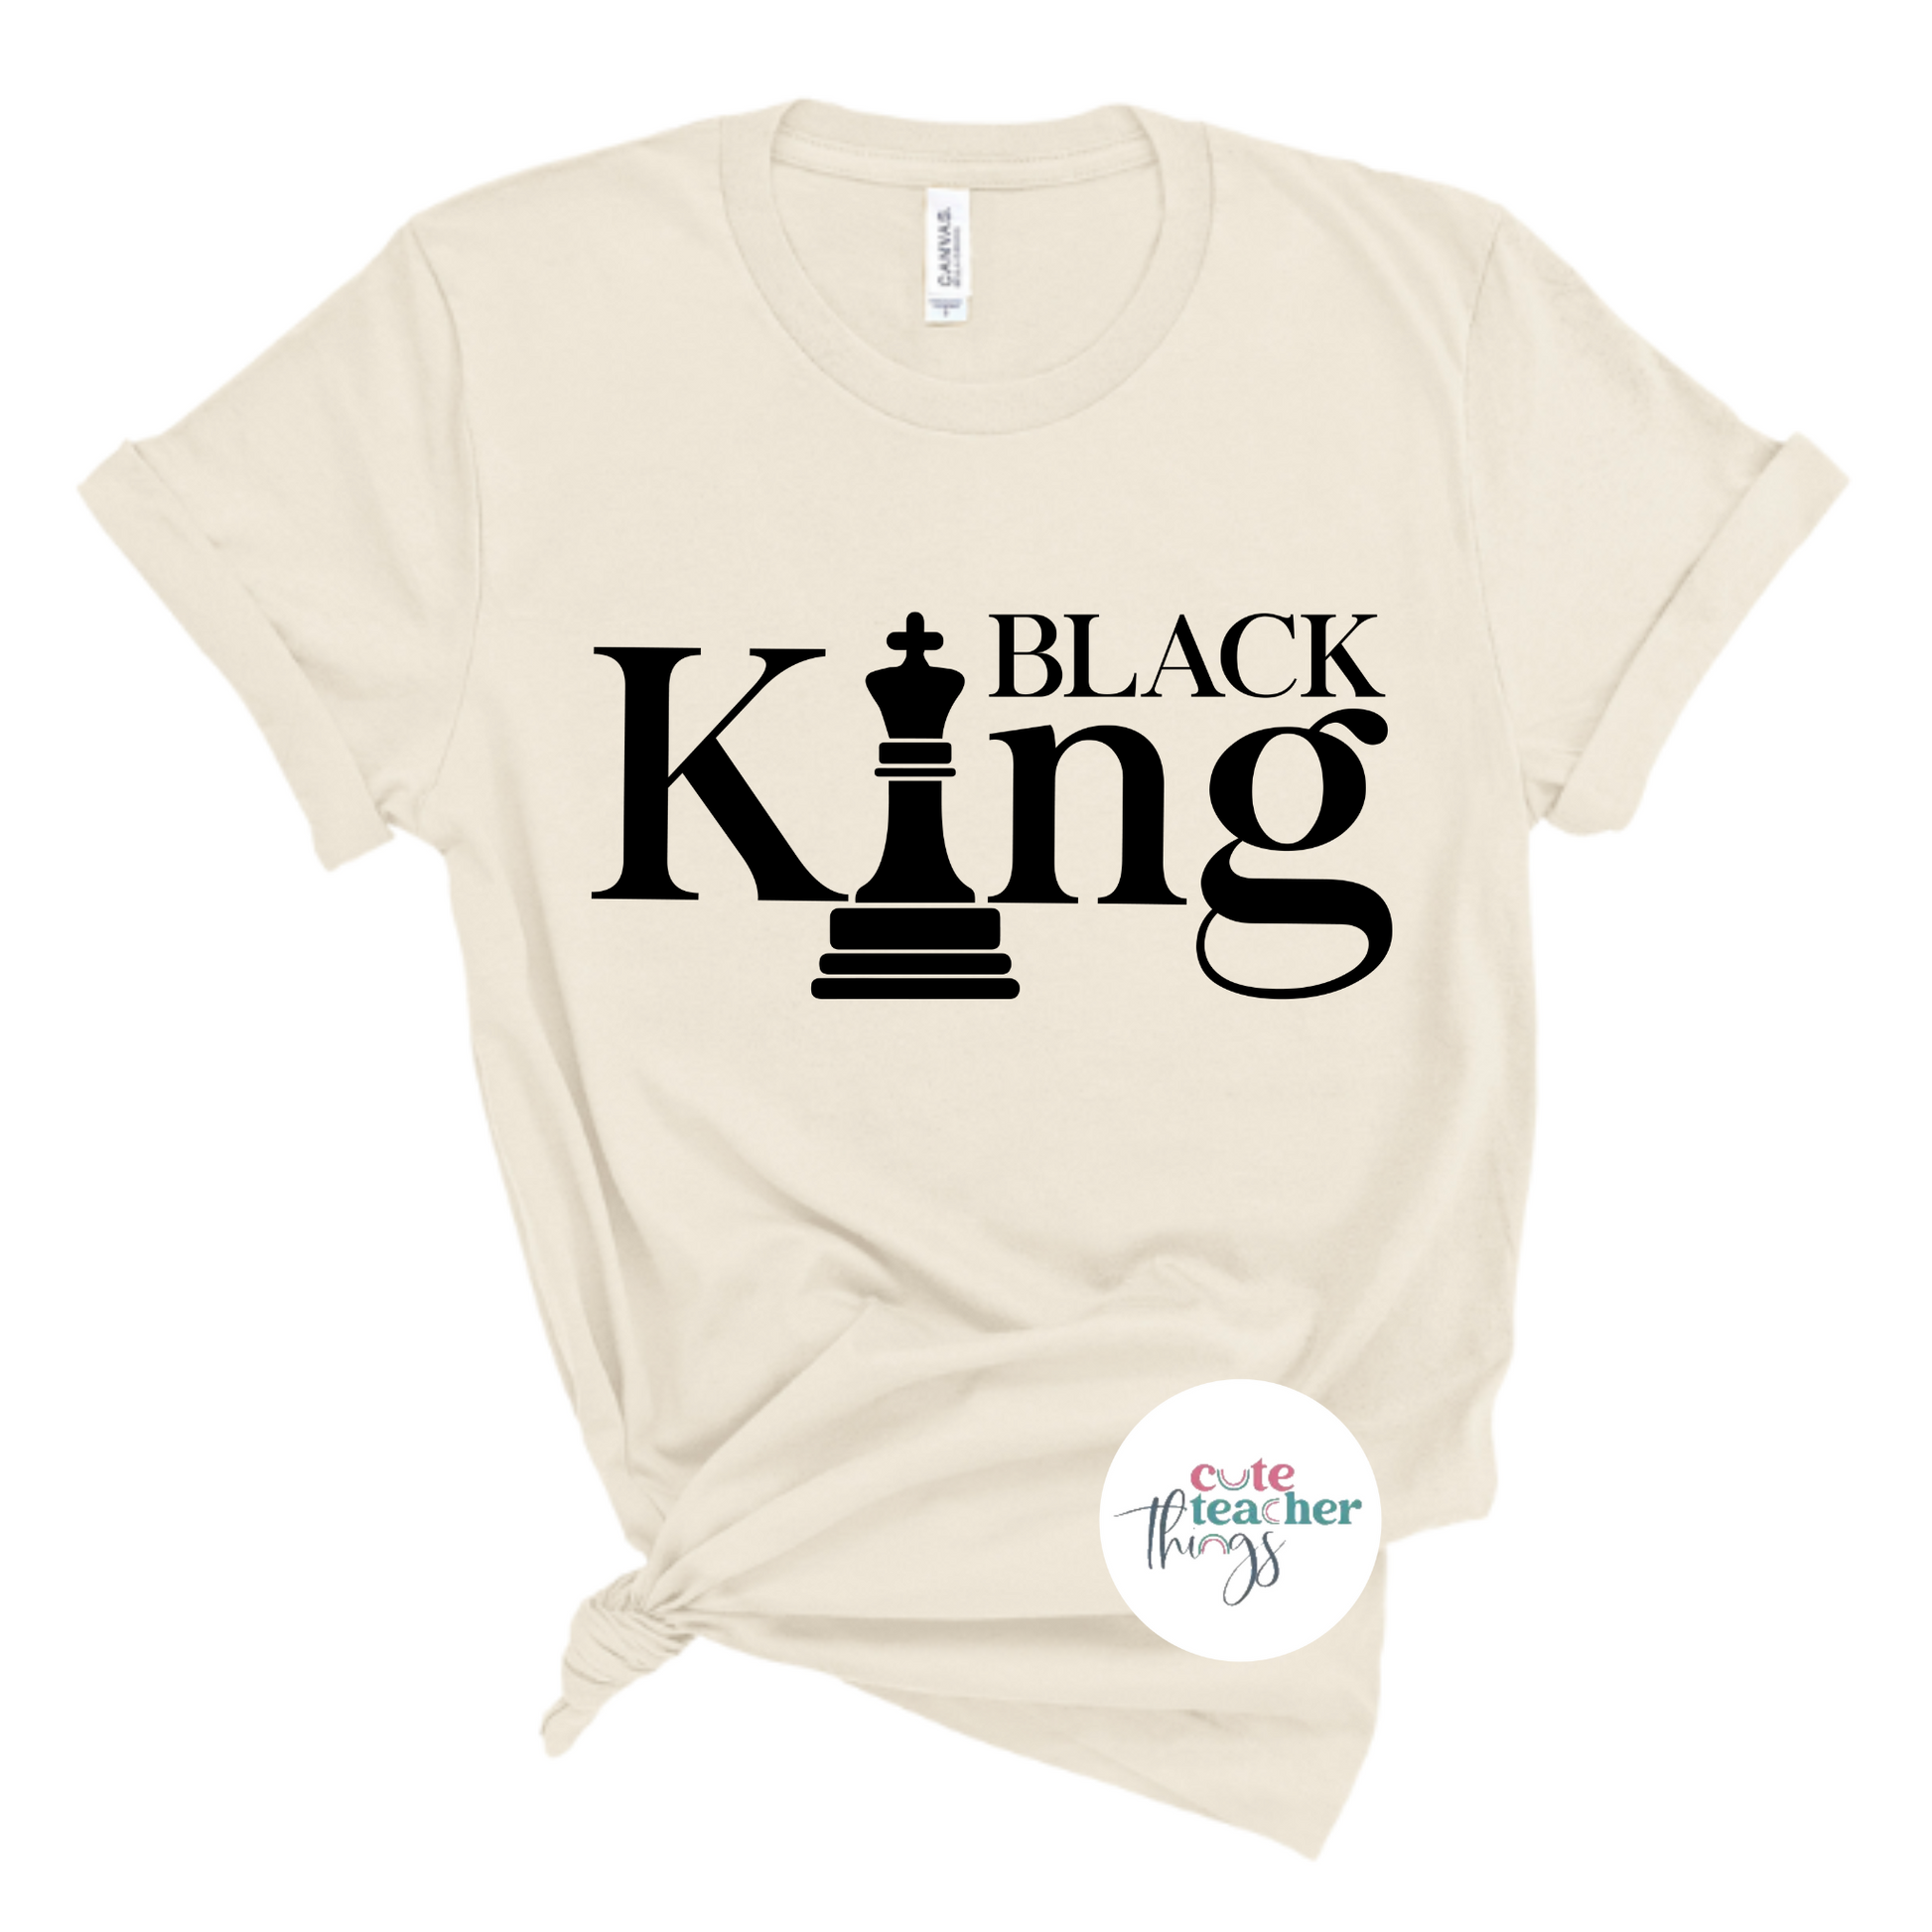 black history month, black lives matter shirt, american-african t-shirt